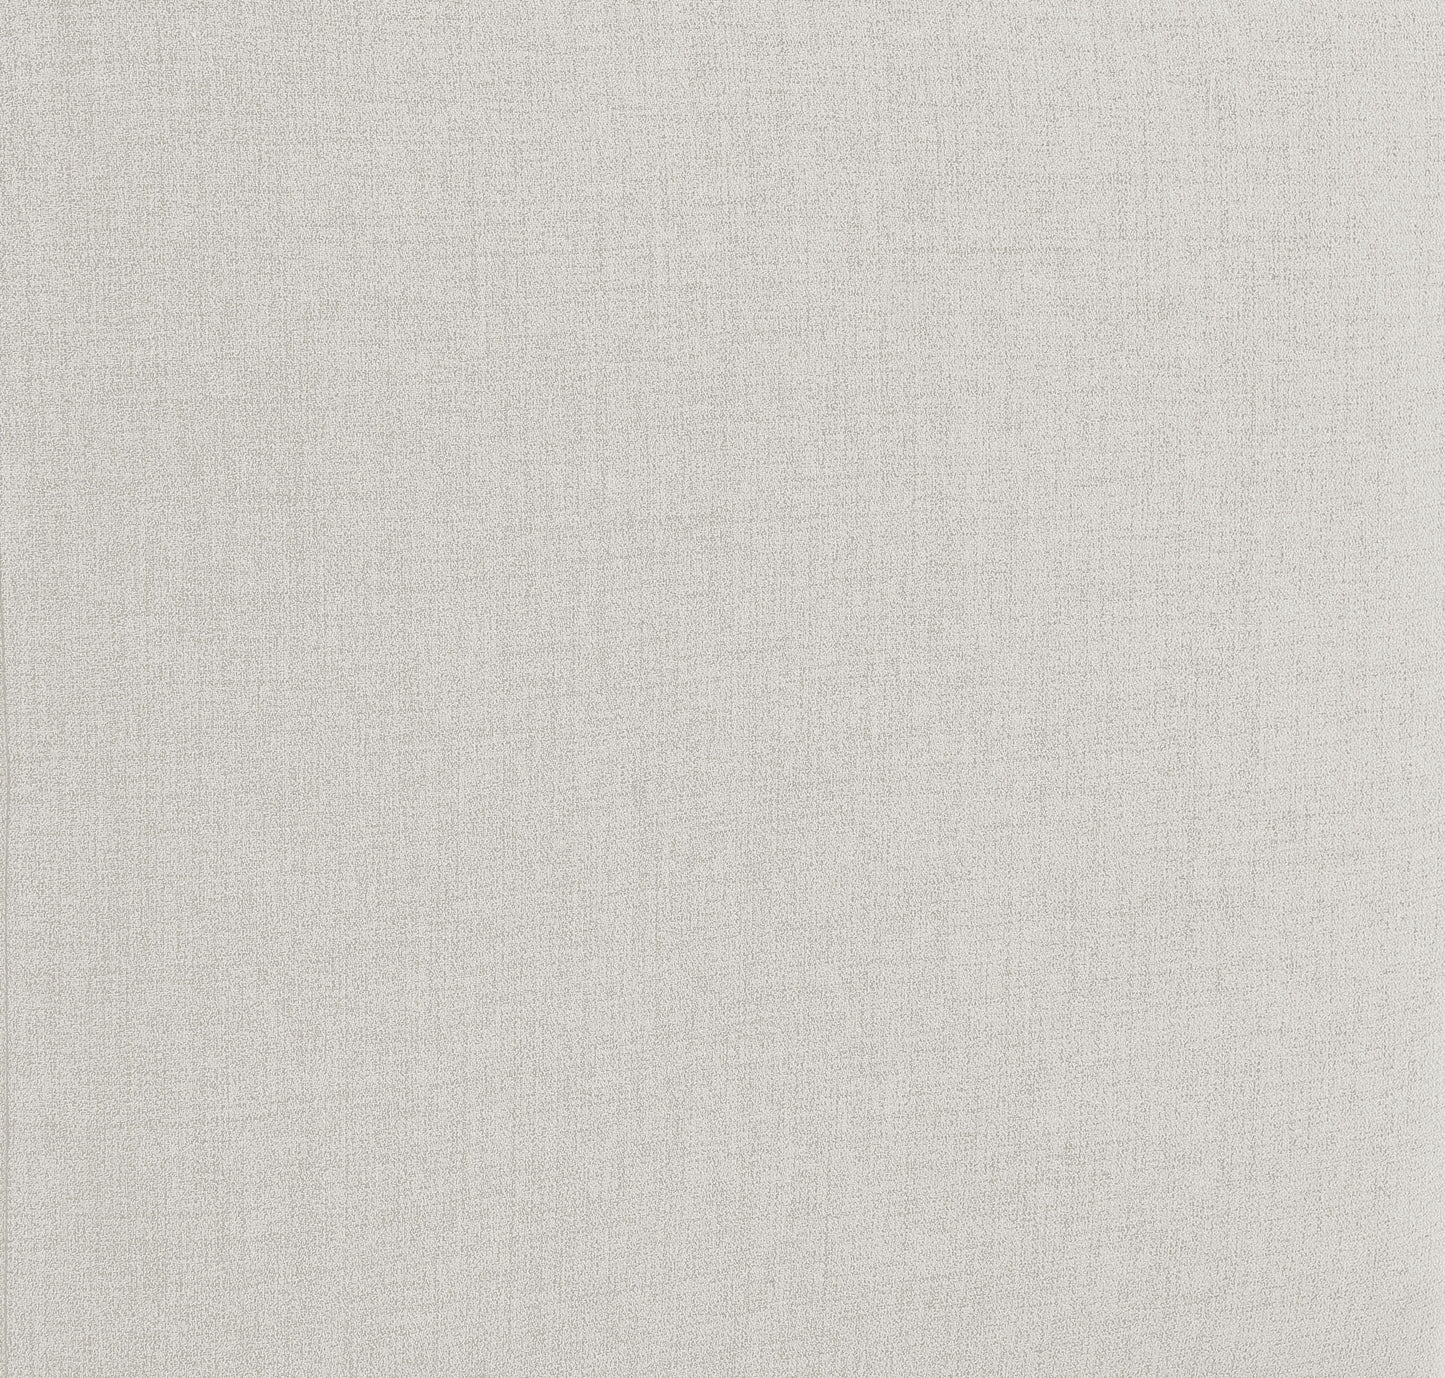 crescent cream durable linen textured modular sofa s144b